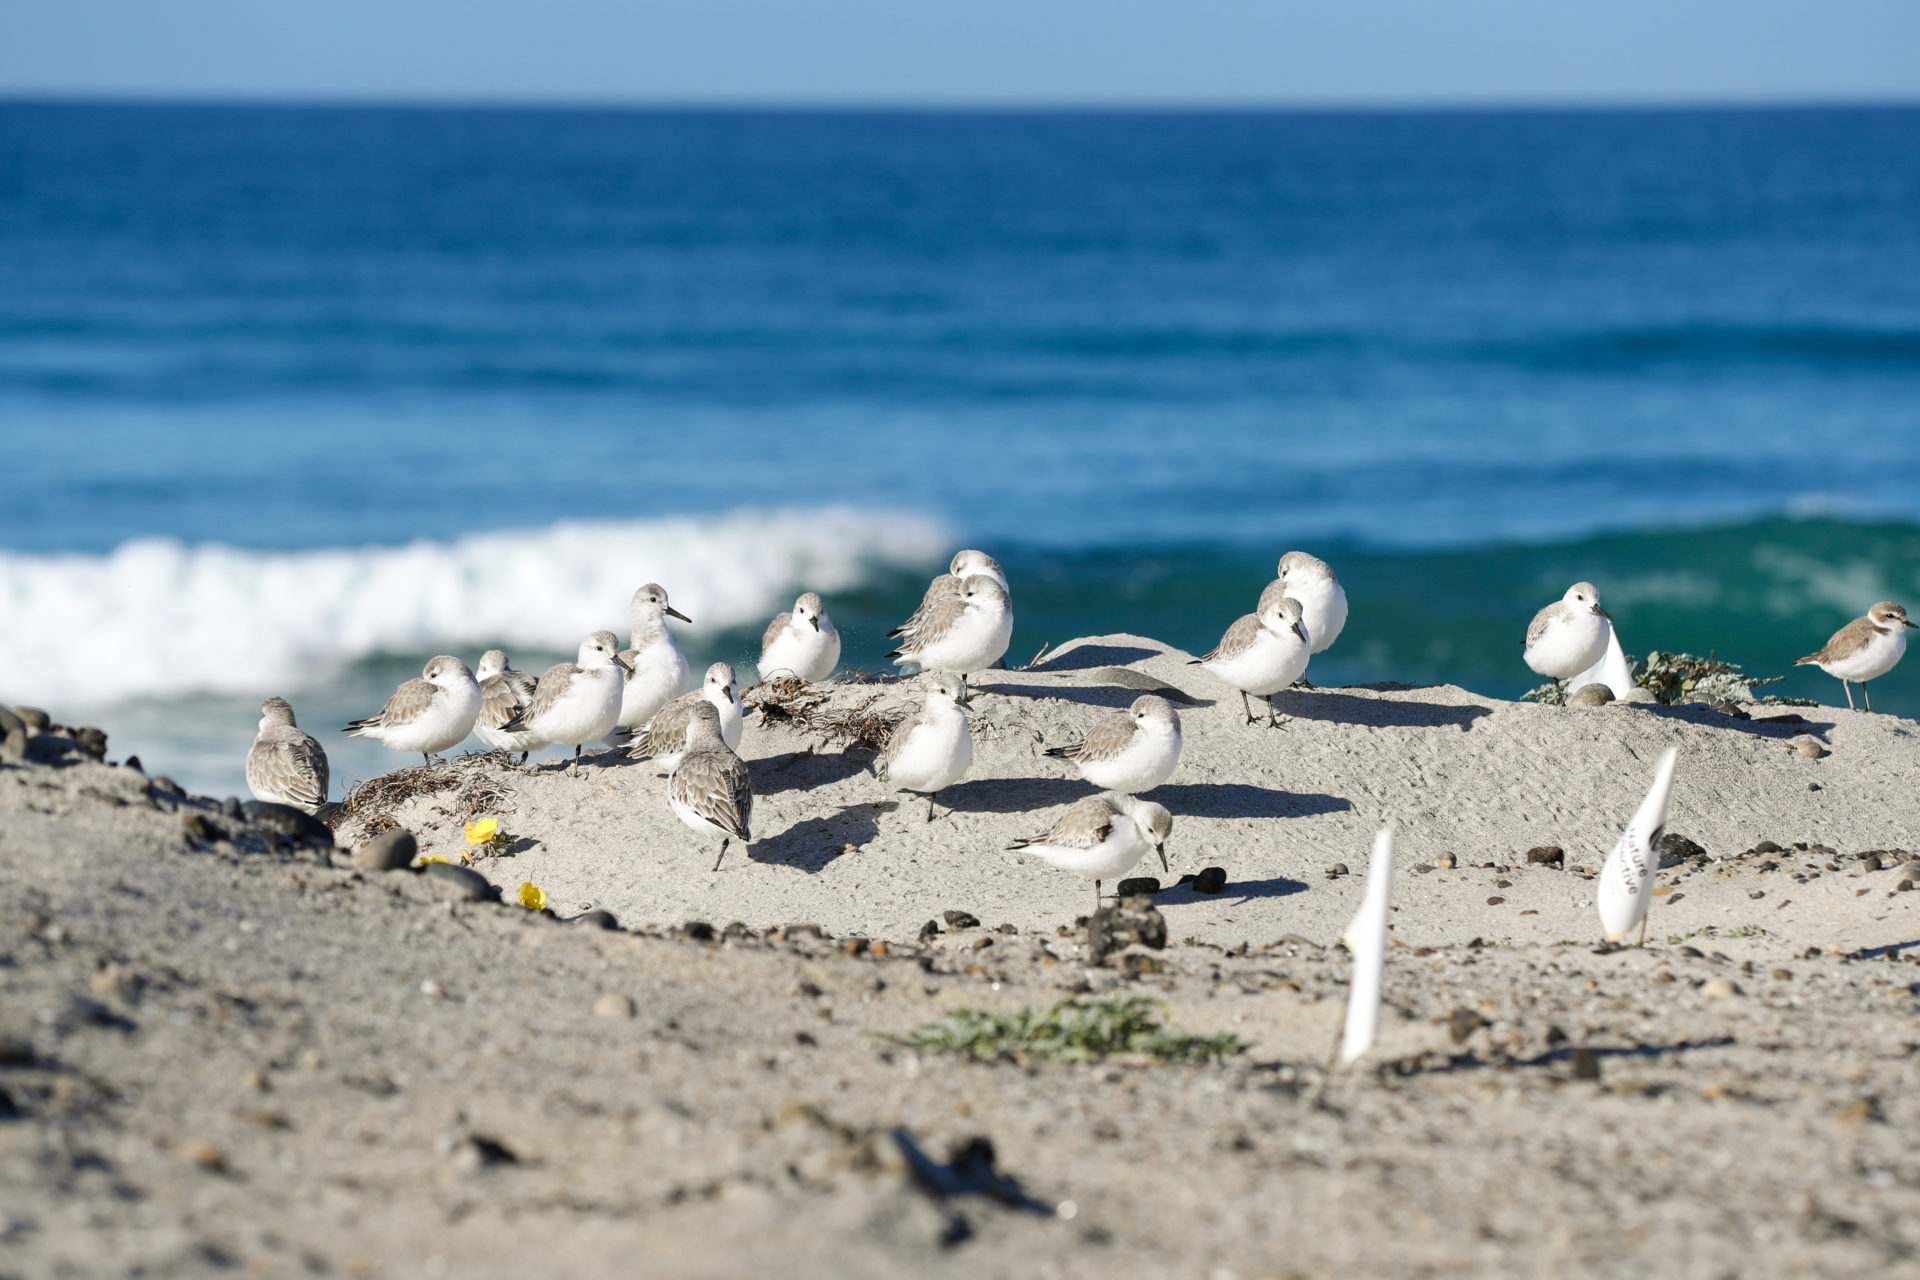 Birds on dunes at the beach